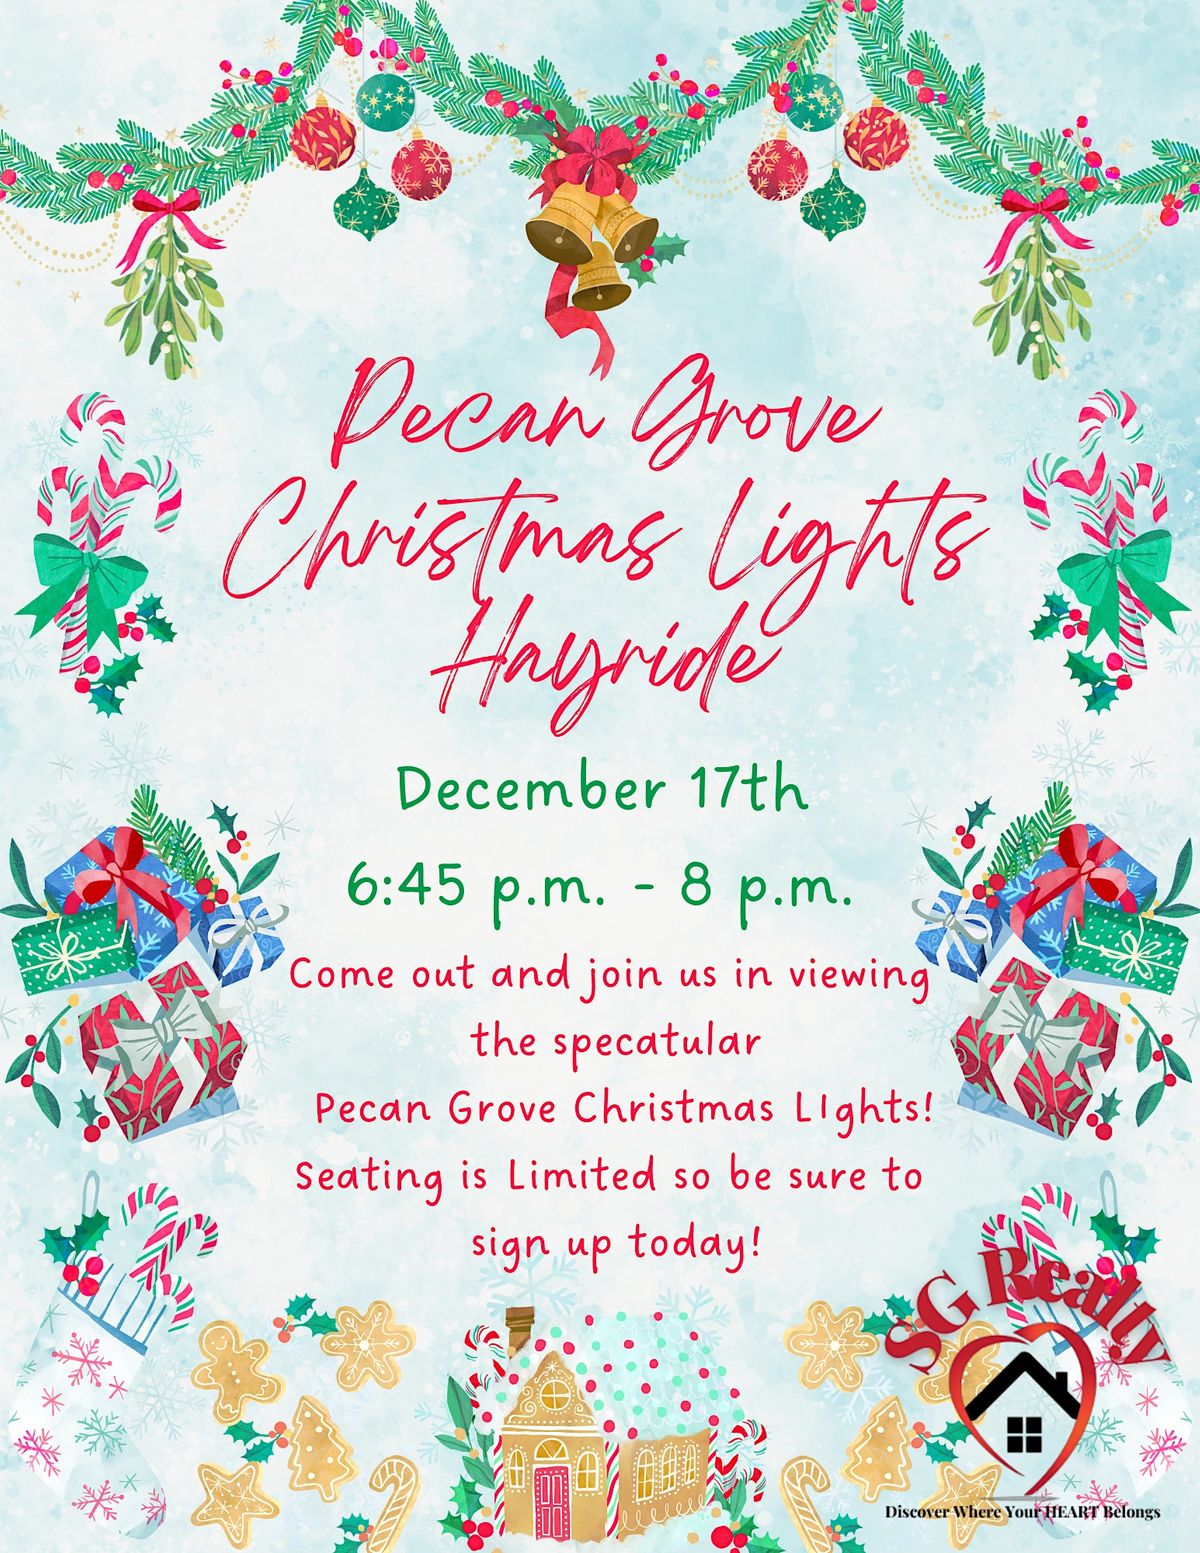 Pecan Grove Christmas Lights Hayride Austin Elementary School, Pitts